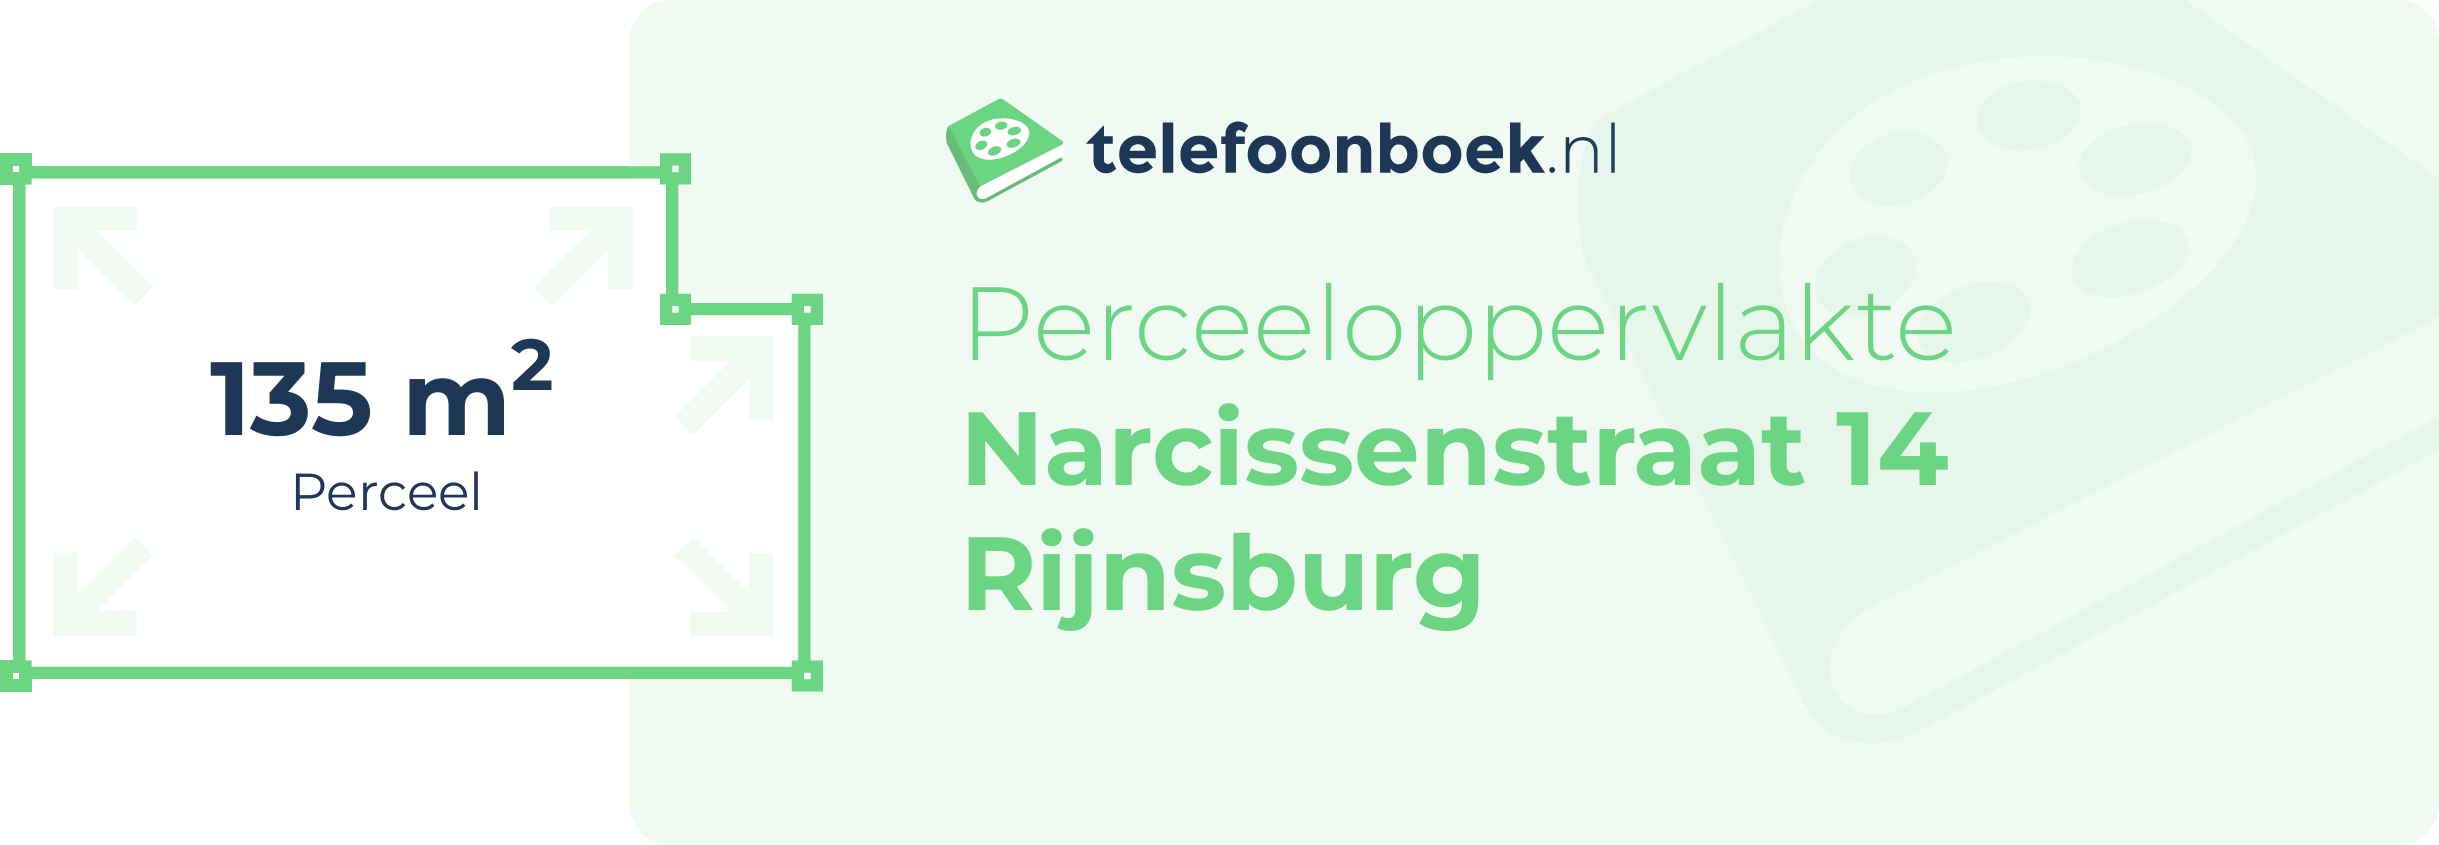 Perceeloppervlakte Narcissenstraat 14 Rijnsburg